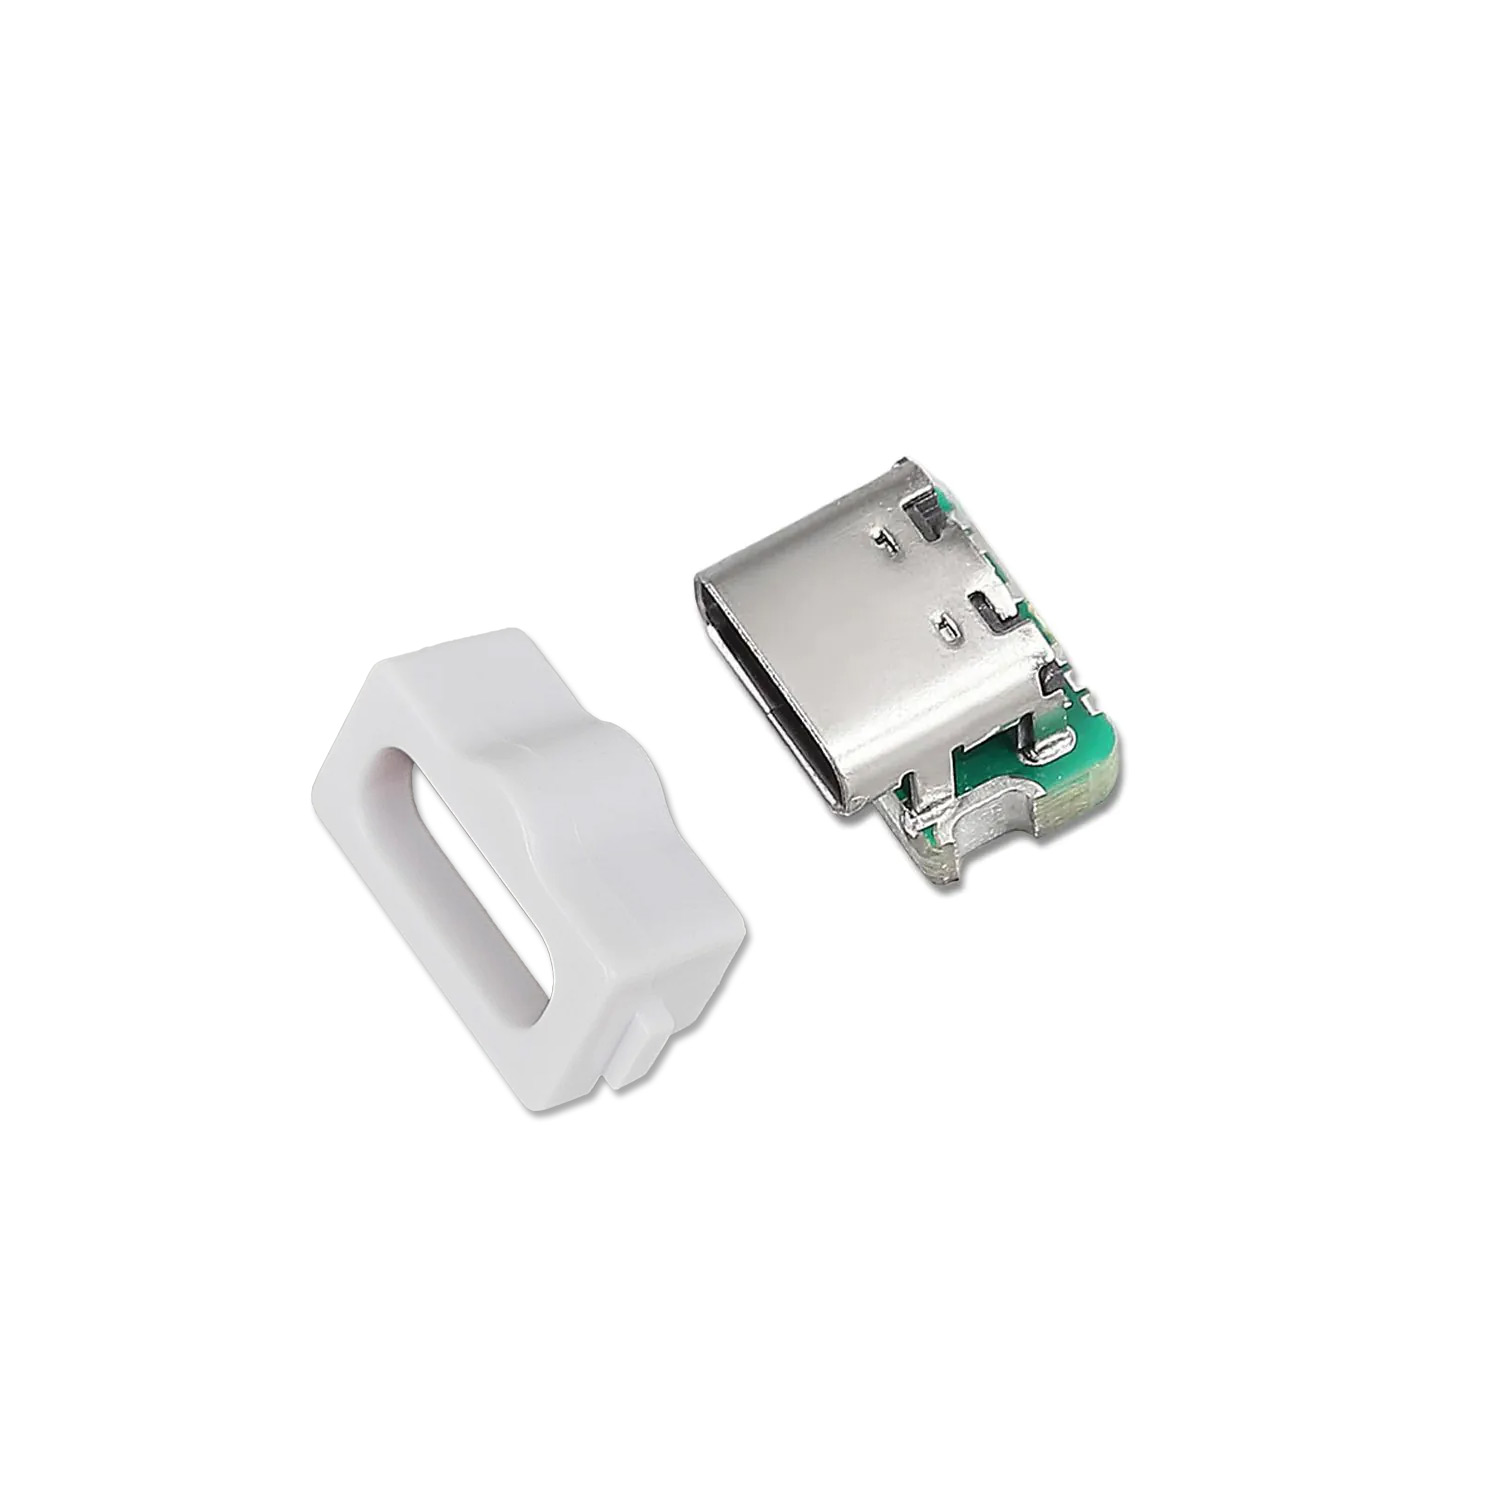 Game Boy Advance SP USB-C Port (White)